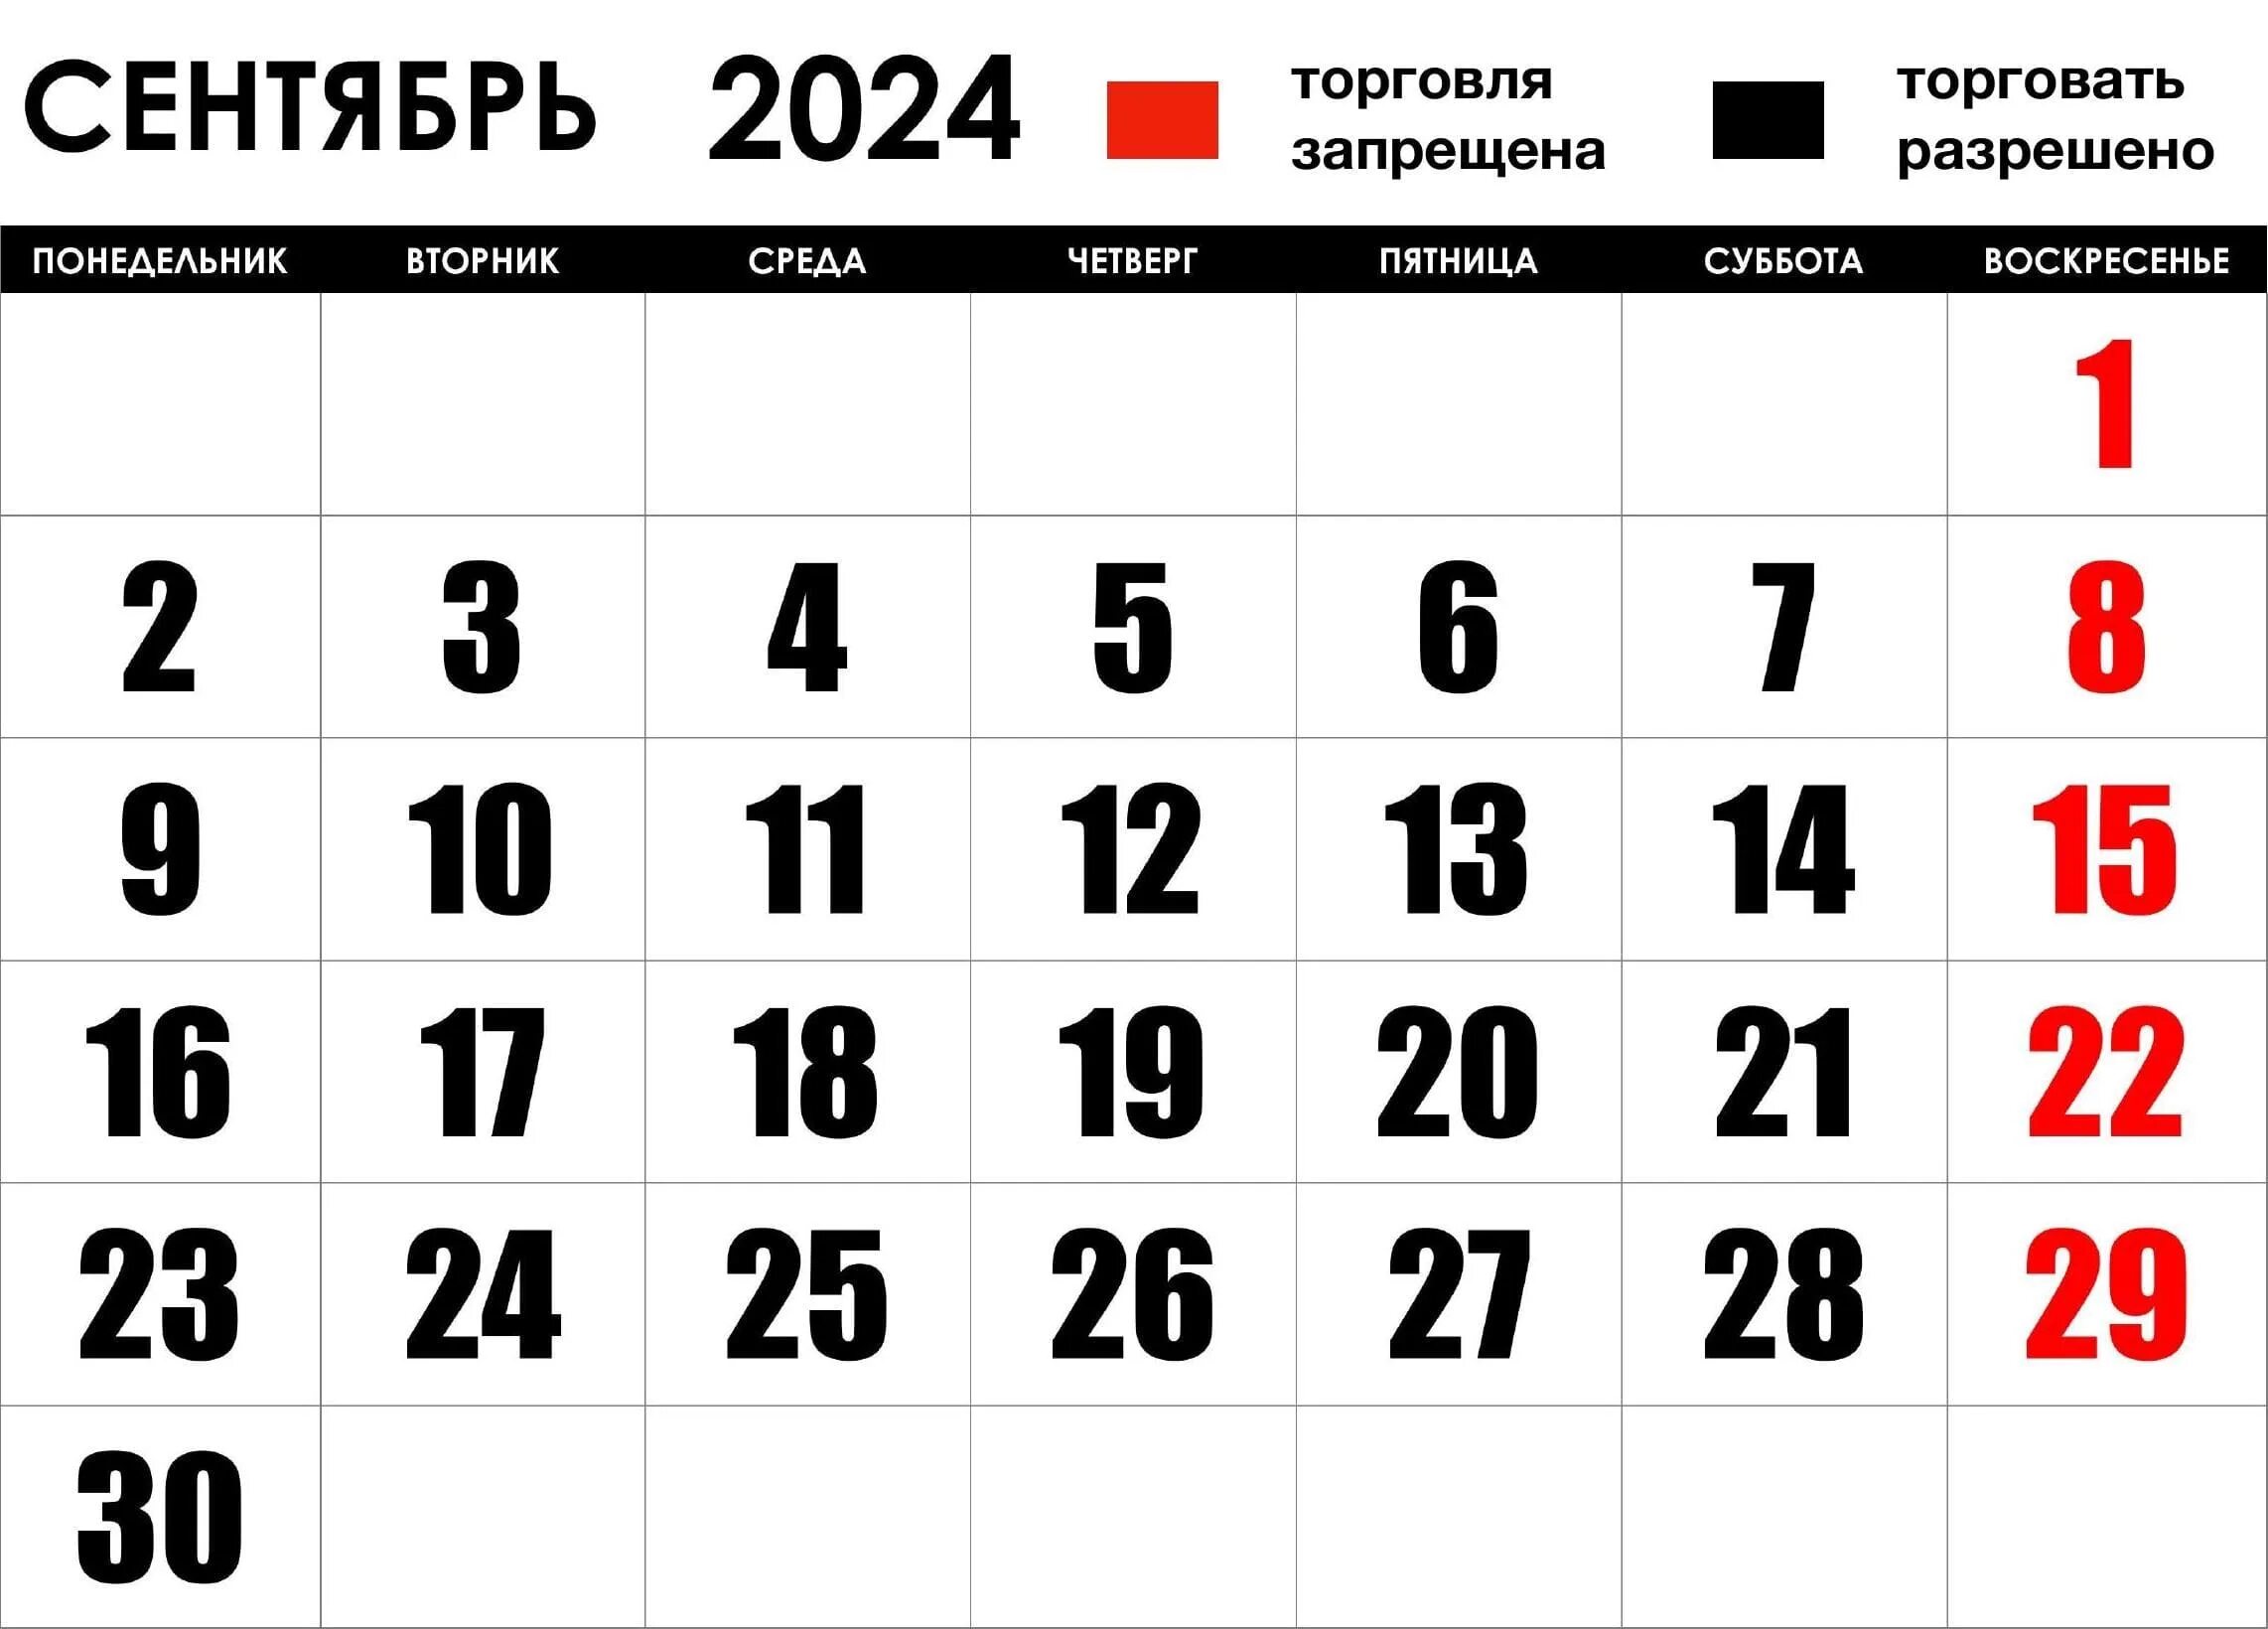 15 апреля 2024 какой день. Календарь насентяюрь 2024. Сентябрь 2024. Календарь сентябрь 2024 года. Sentabr Calendar 2024.